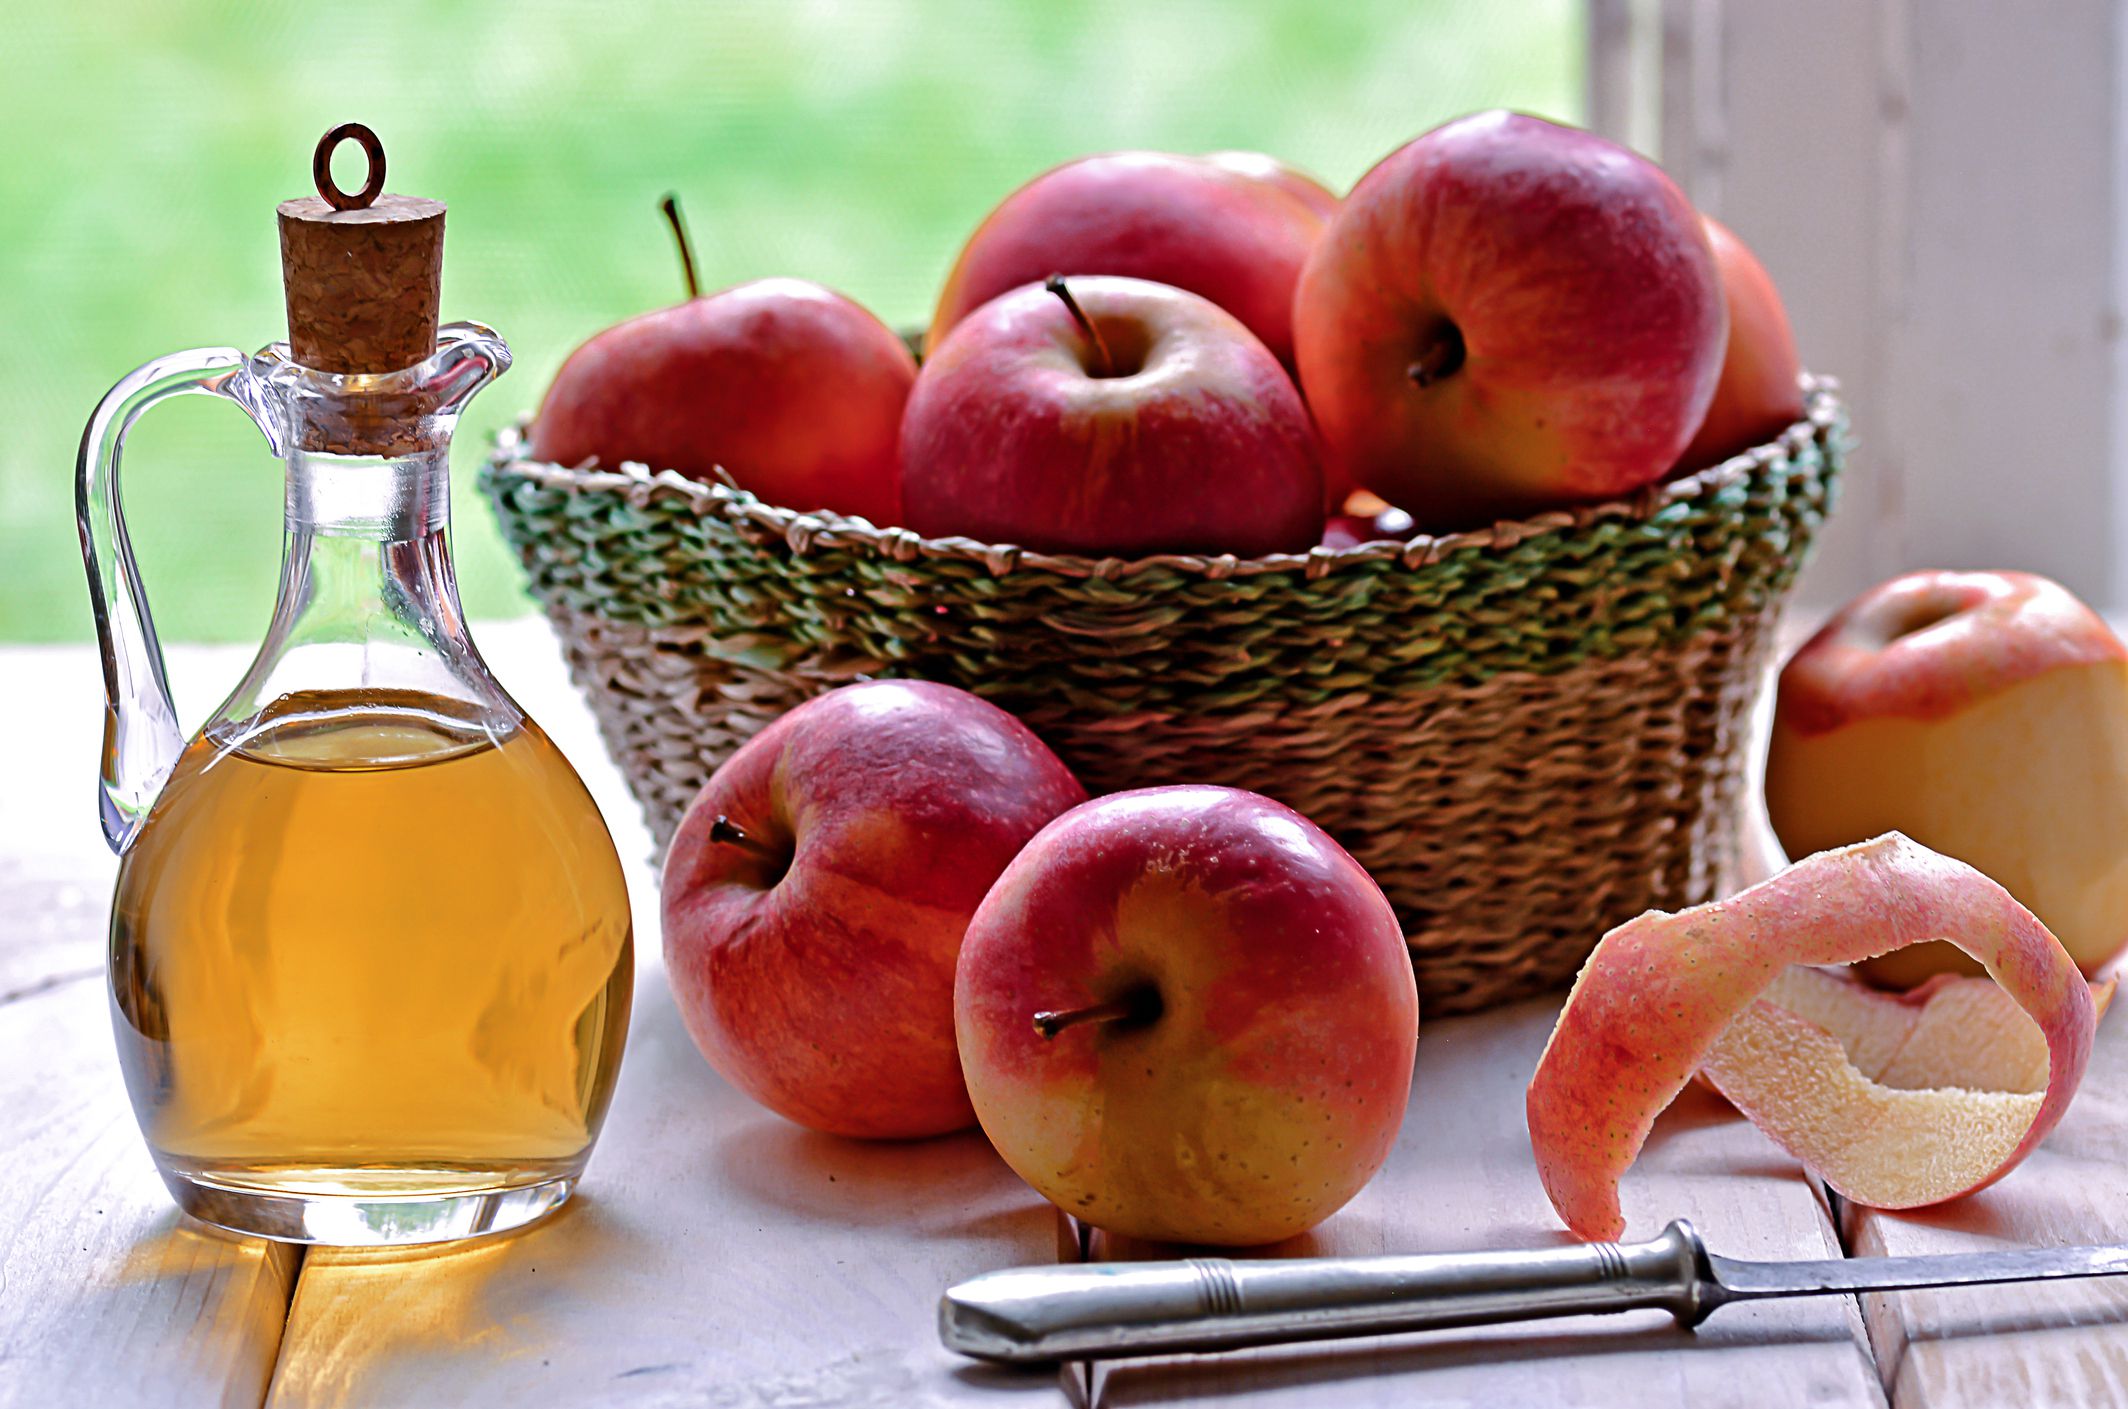 Does apple cider vinegar help with bladder control?